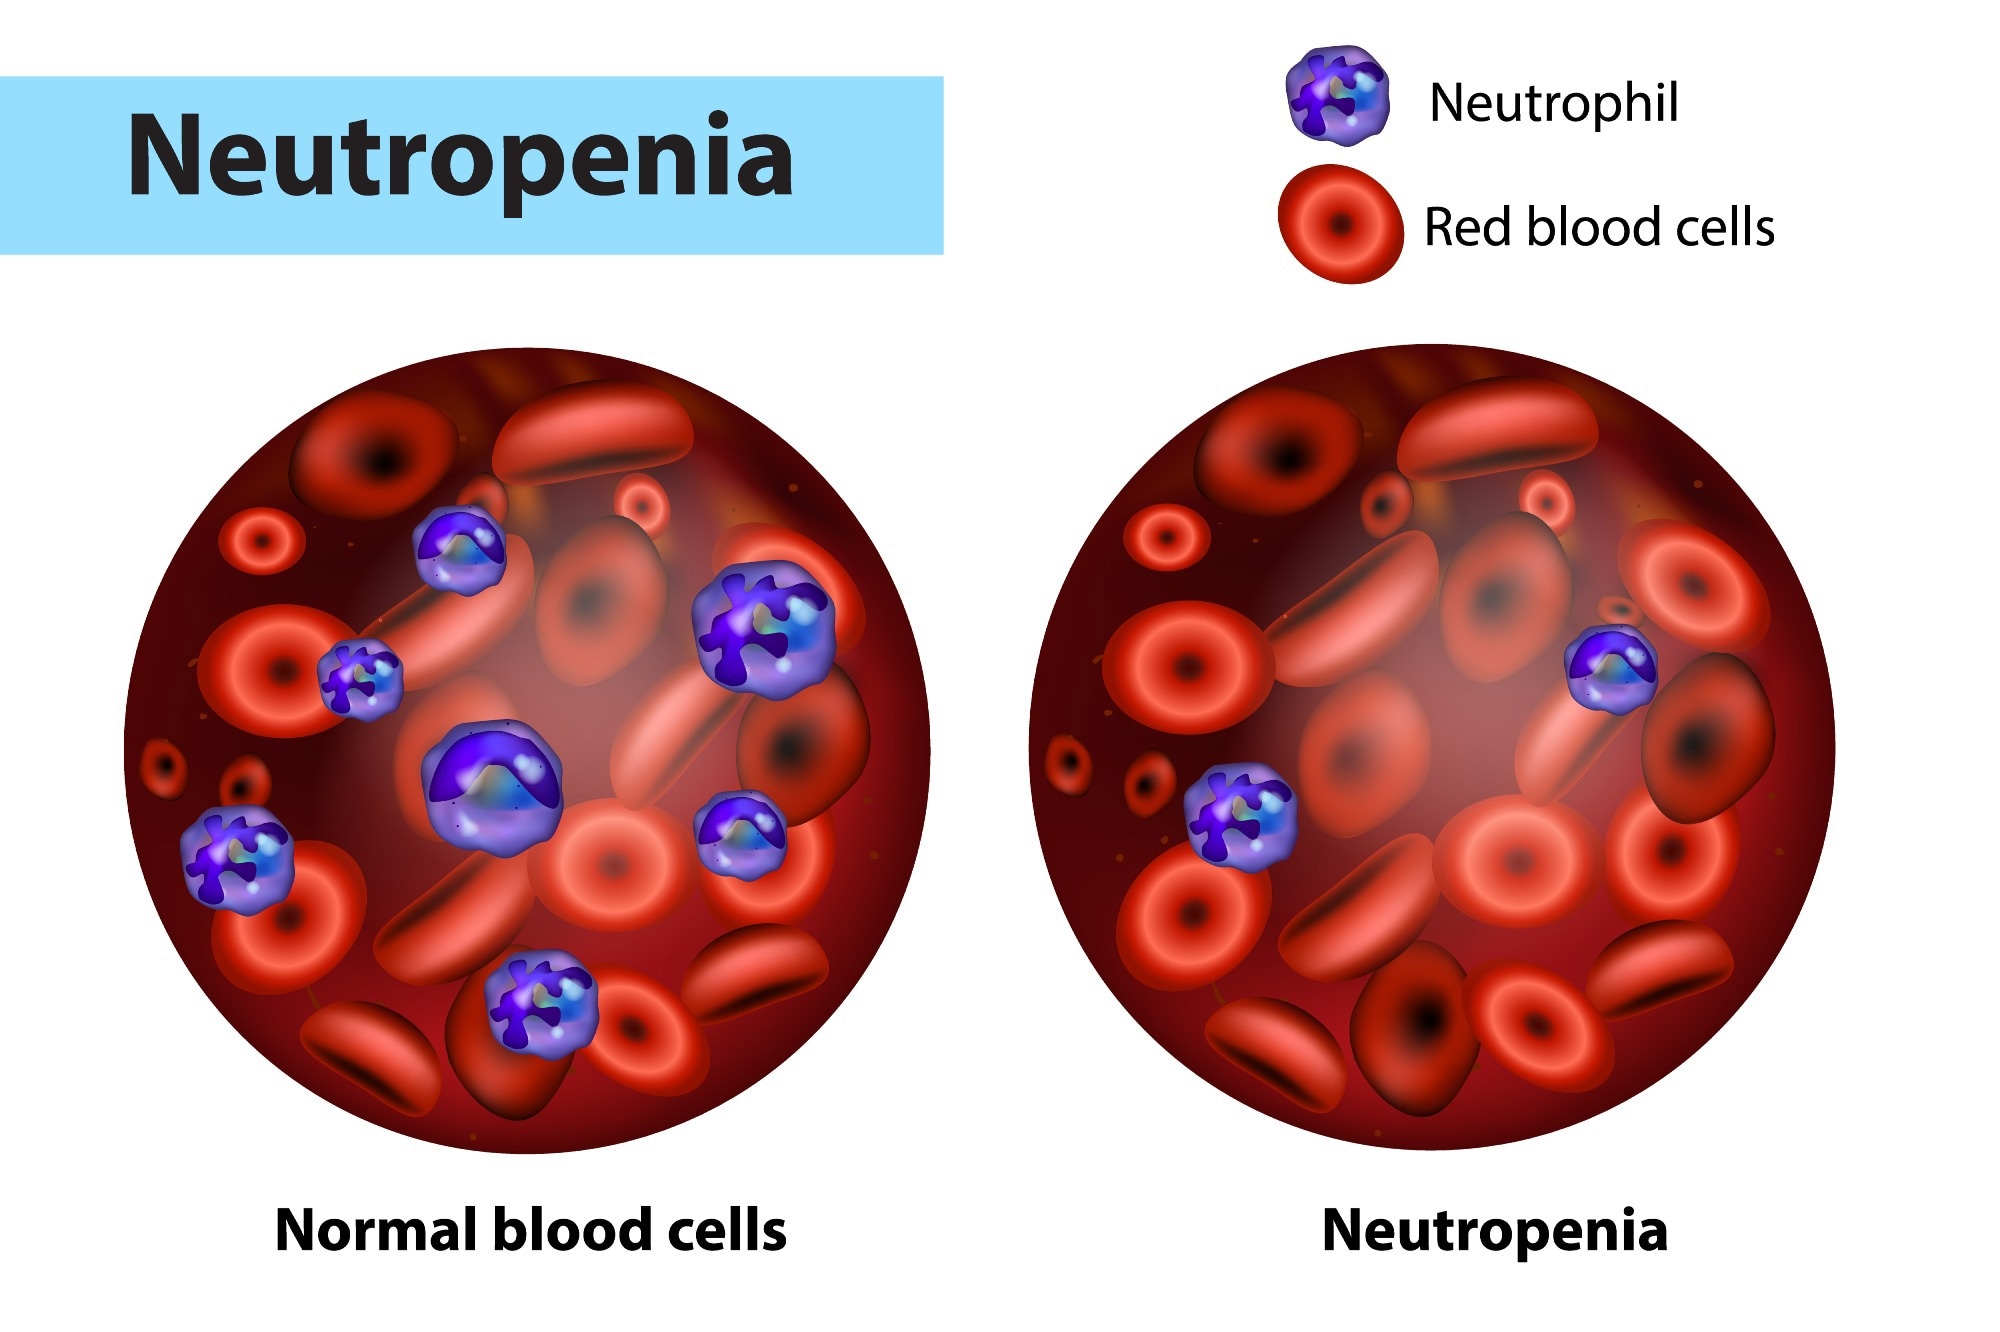 Neutropenia and normal blood cells. Image Credit: Sakurra / Shutterstock